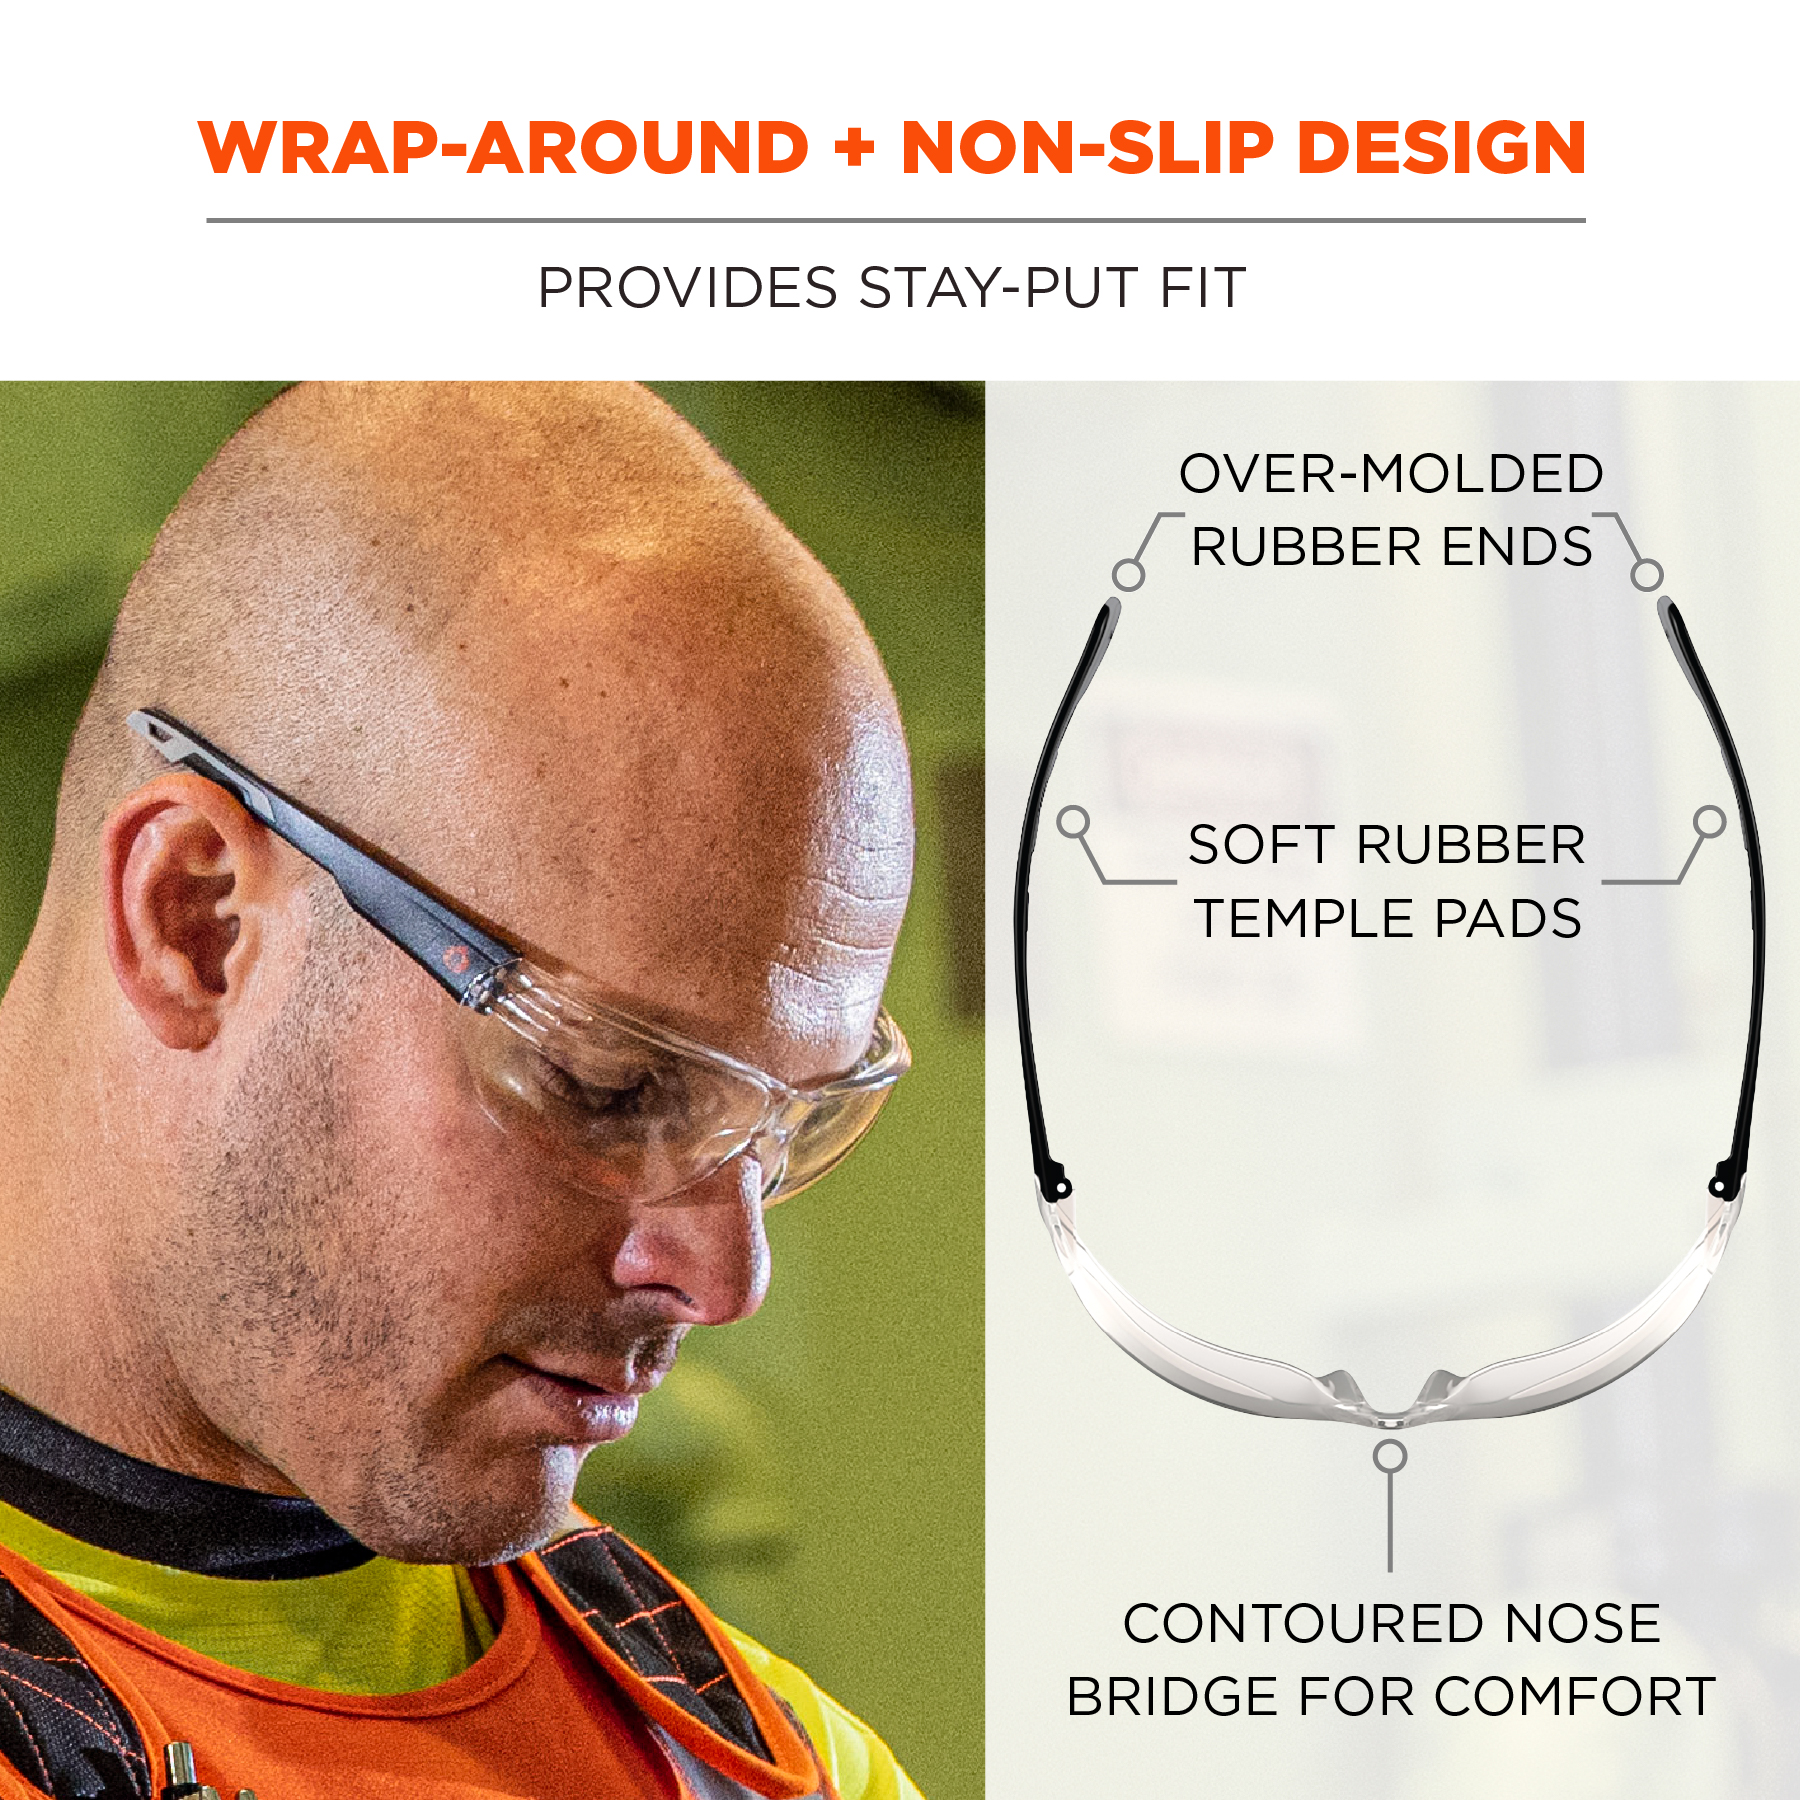 Dellenger Enhanced Anti-Fog & Scratch-Resistant Safety Glasses with  Adjustable Temples